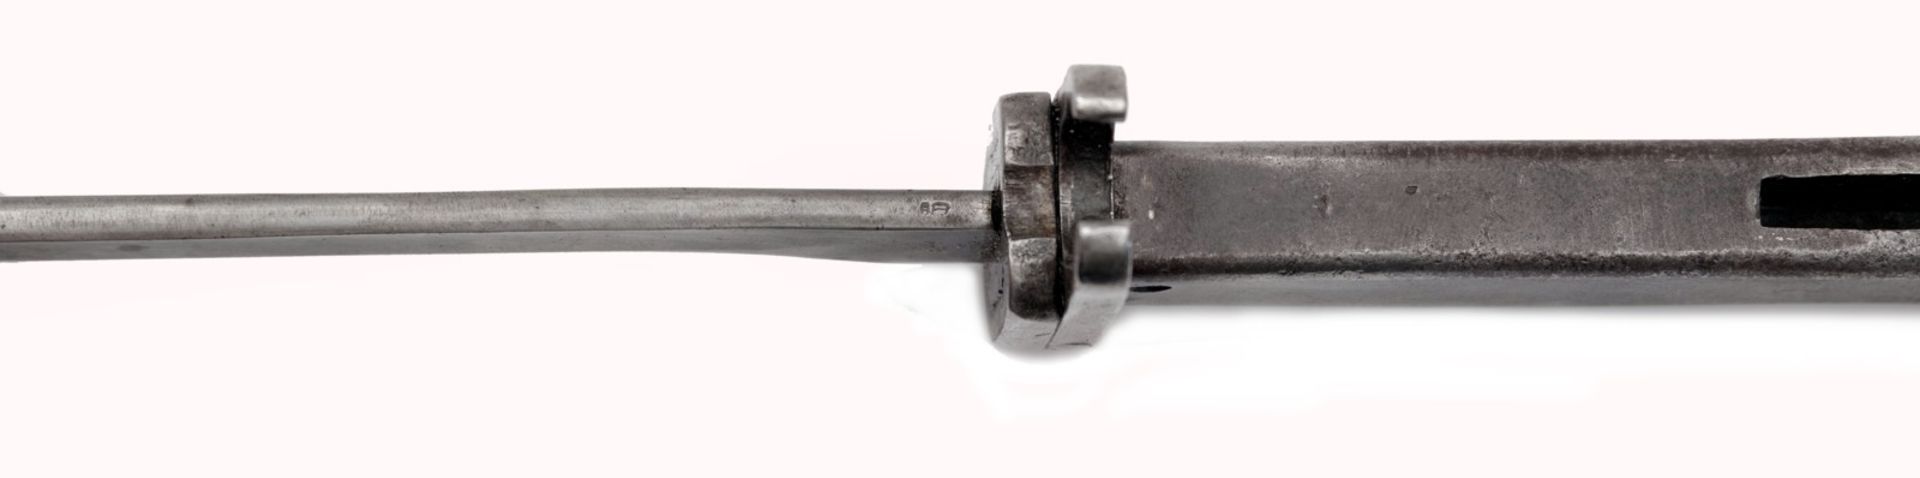 All-Steel 1916 Ersatz Bayonet - Image 3 of 3